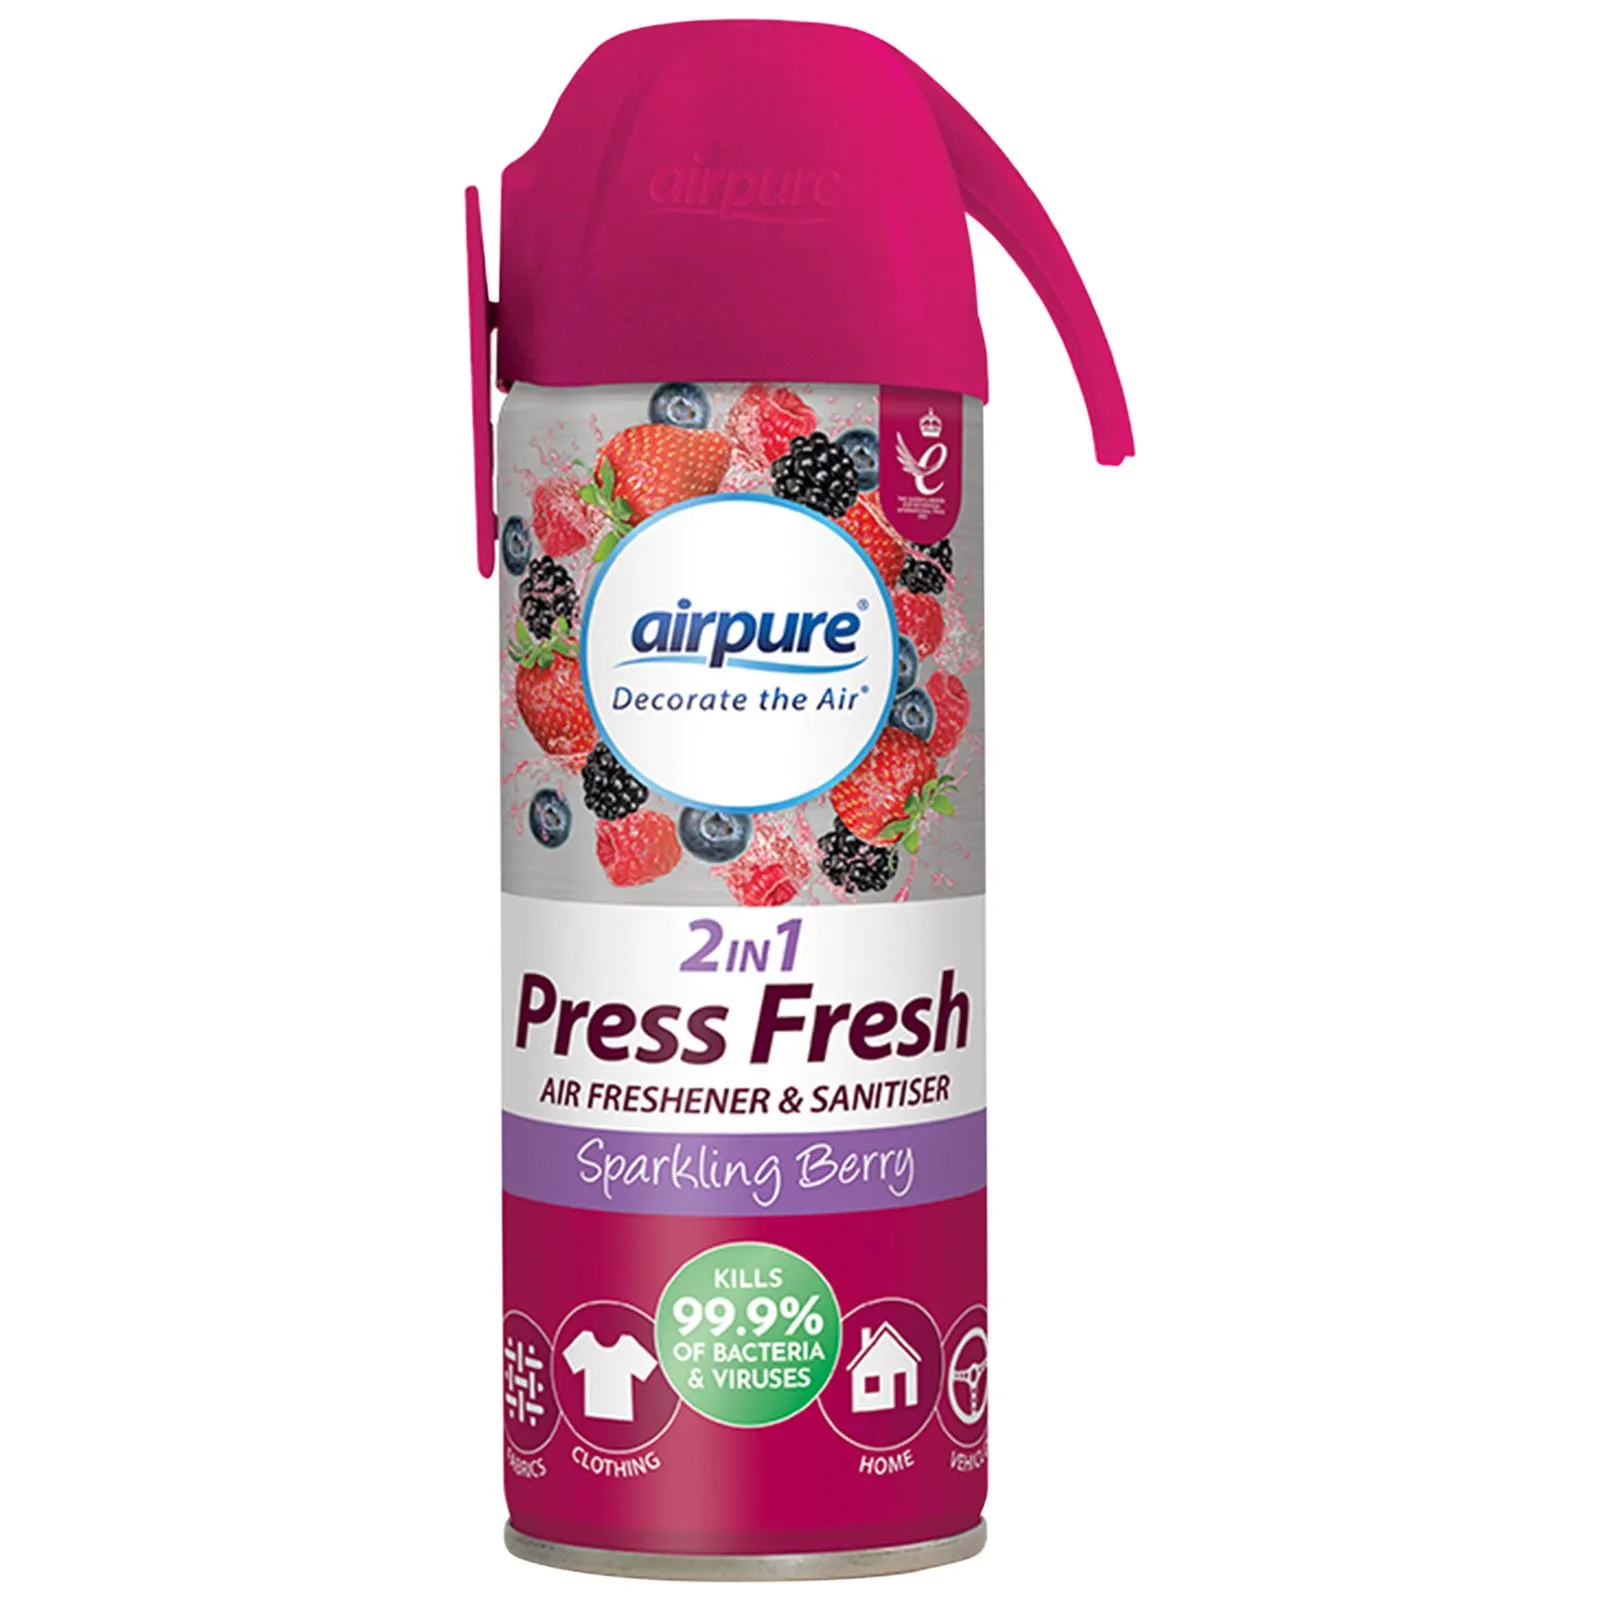 AIRPURE 2in1 Press Fresh Sparkling Berry Airfreshener & Sanitiser 180ml